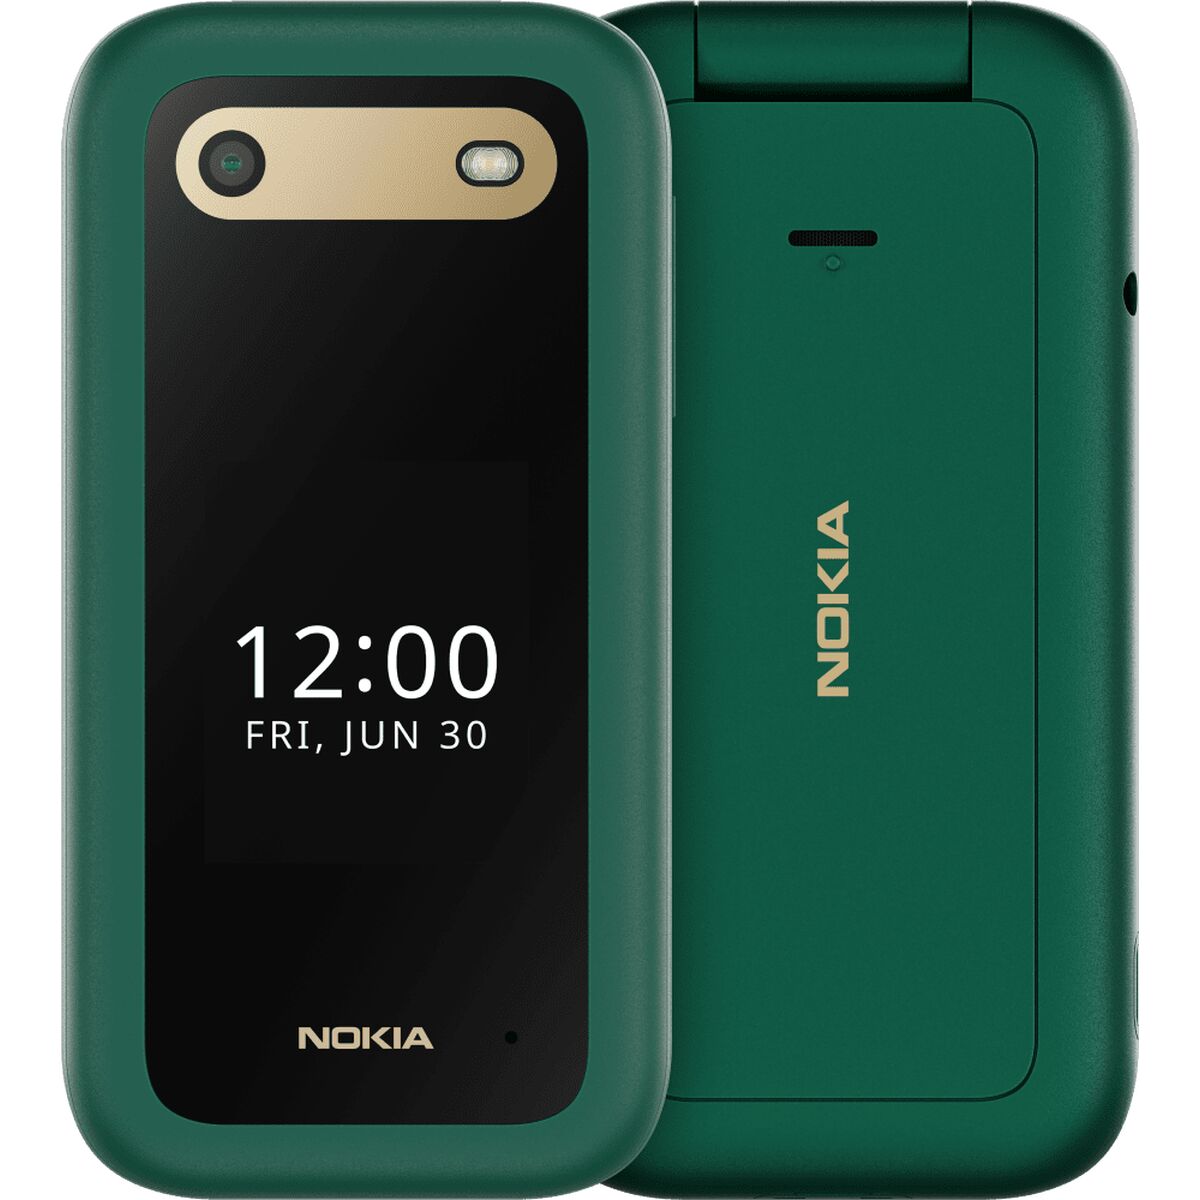 Mobiltelefon Nokia 2660 FLIP grün 2,8" 128 MB - CA International 